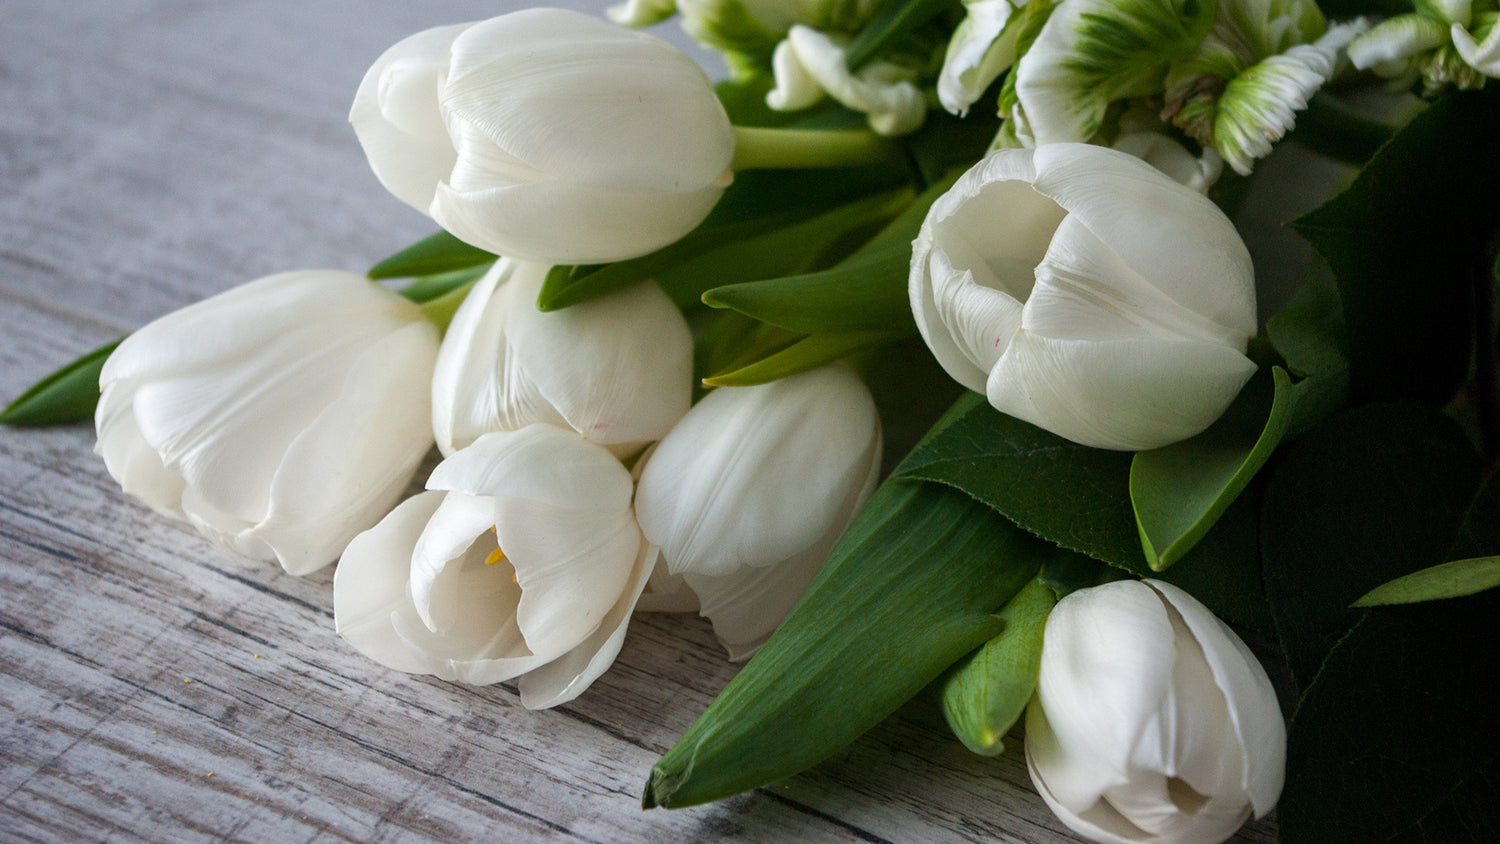 arti bunga tulip putih